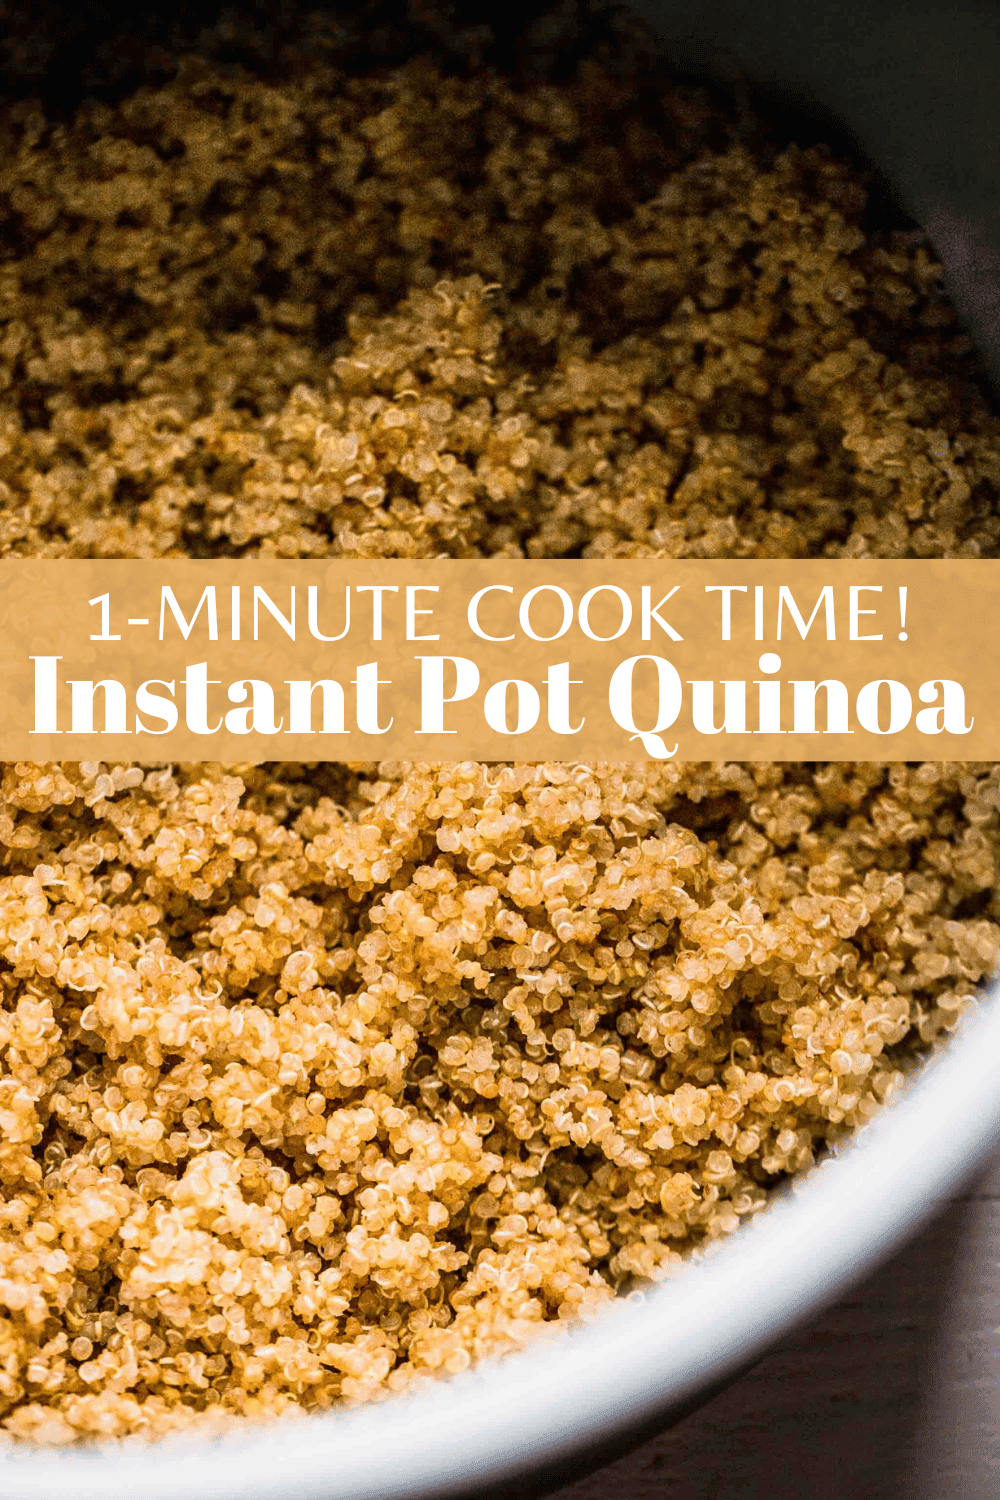 https://www.platingsandpairings.com/wp-content/uploads/2022/06/PIN2-instant-pot-quinoa-recipe-1.png